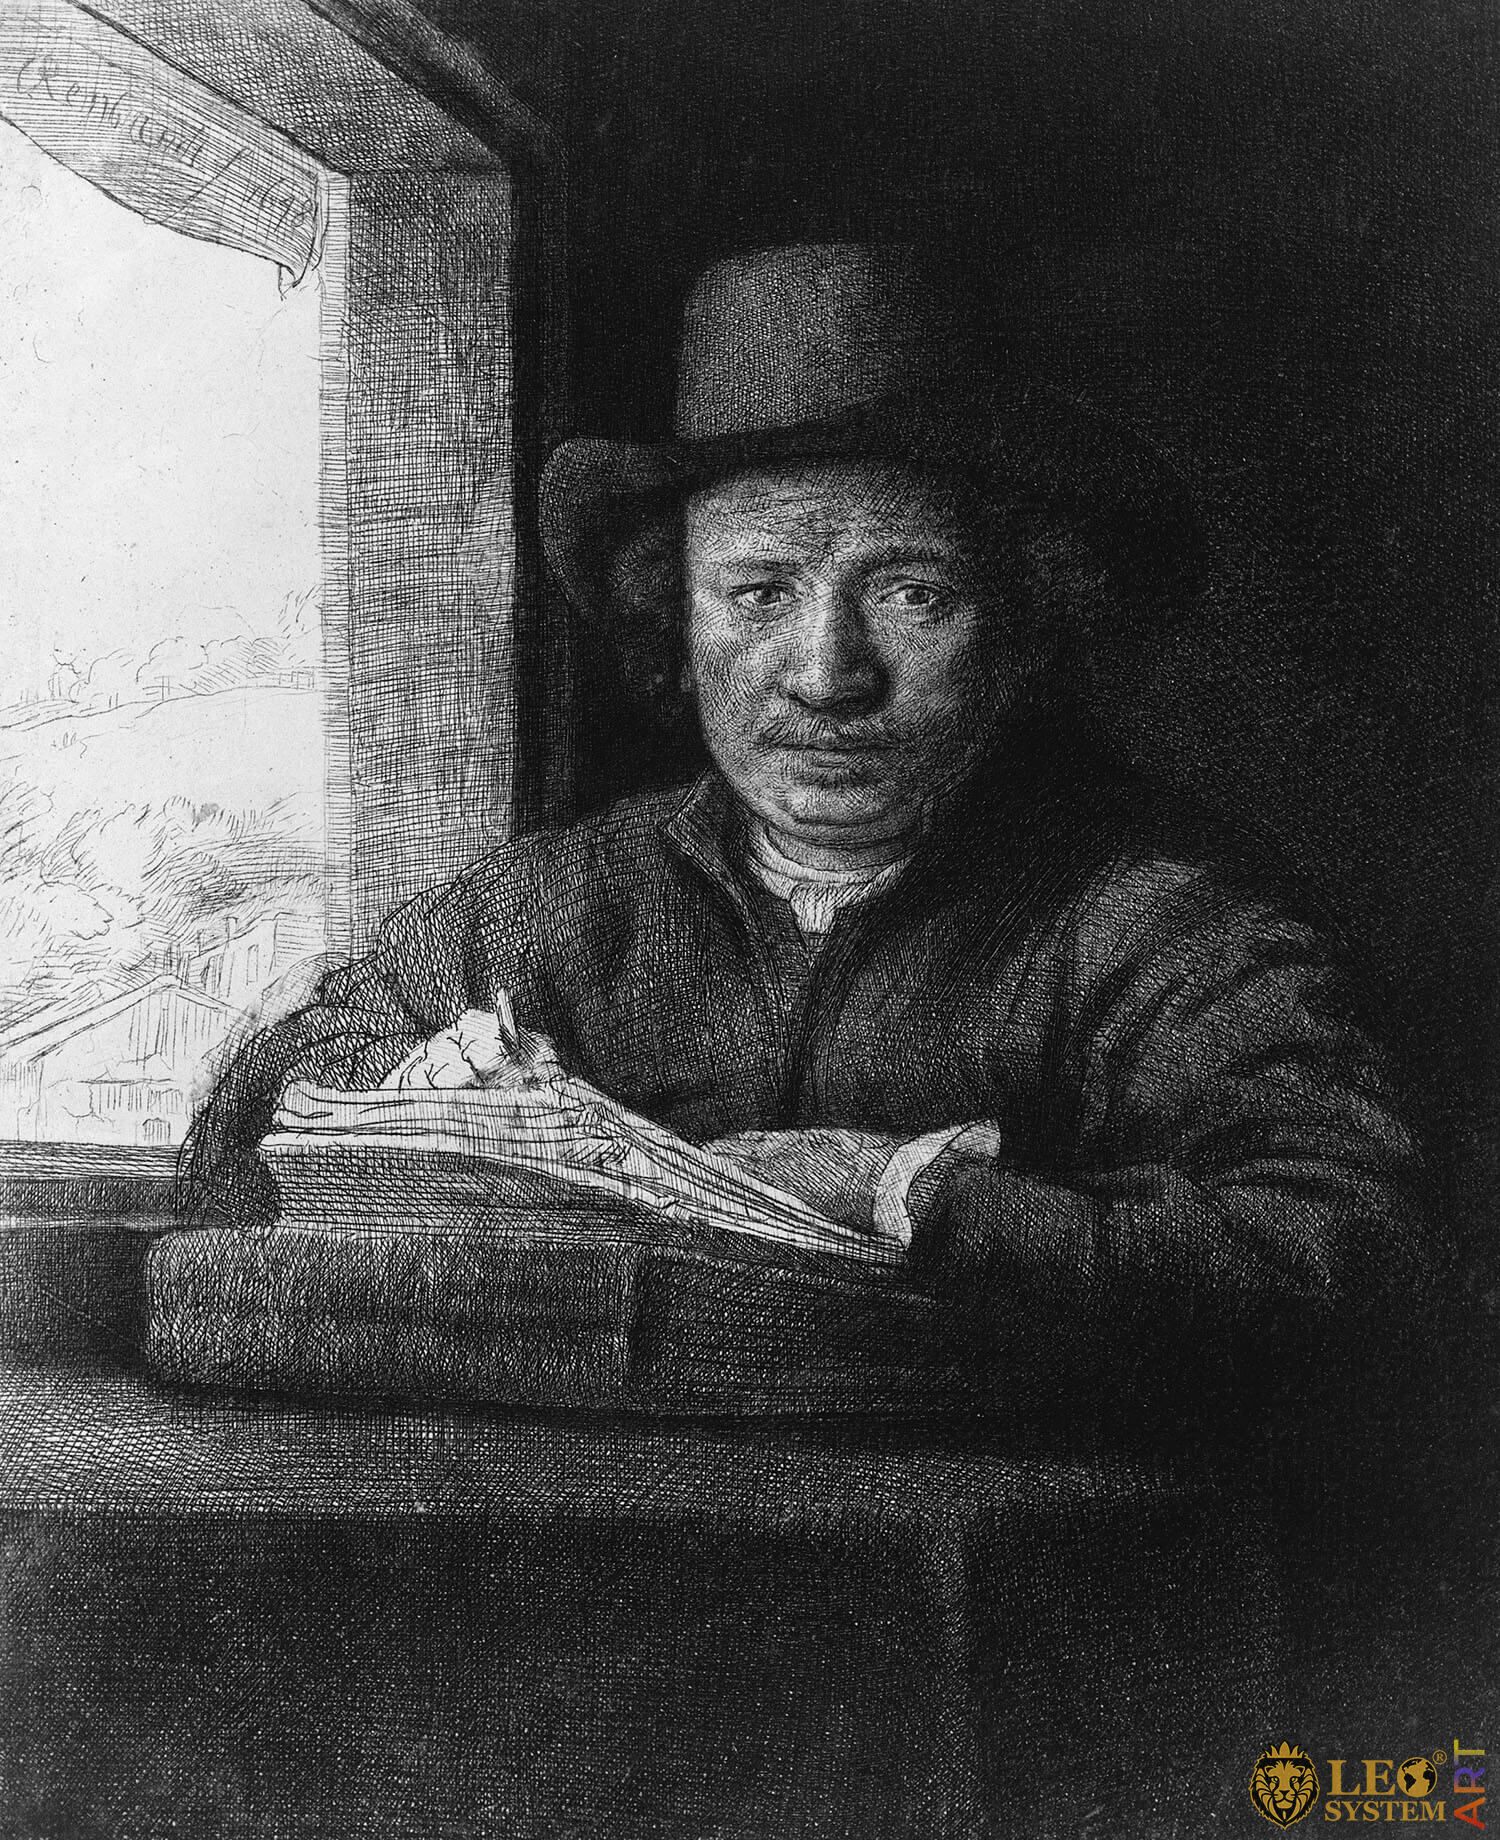 Self-Portrait Etching at a Window, Painter: Rembrandt van Rijn, 1648, Amsterdam, Netherlands, Original painting